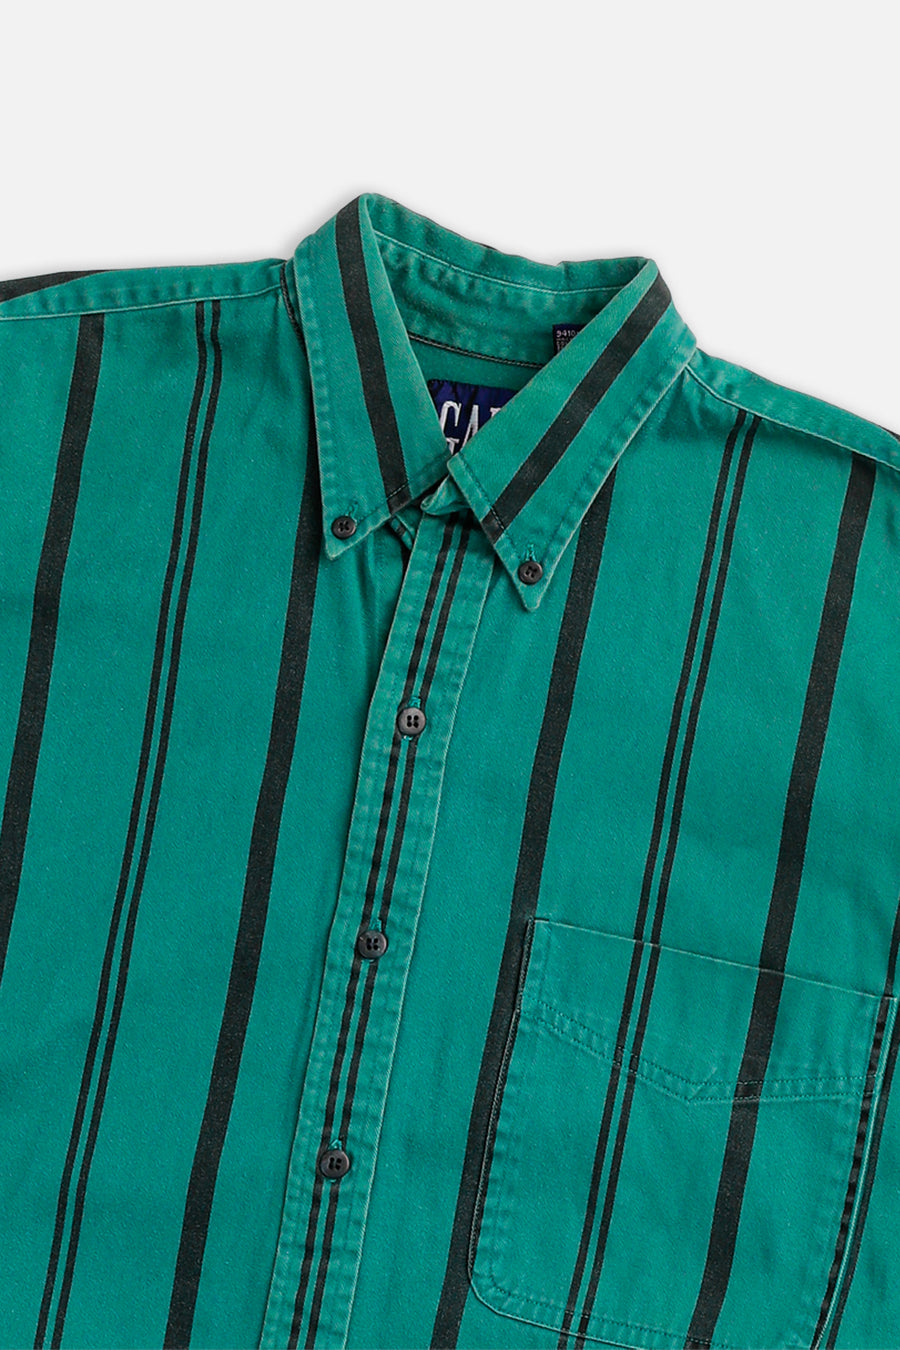 Vintage Gap Button Up Shirt - S